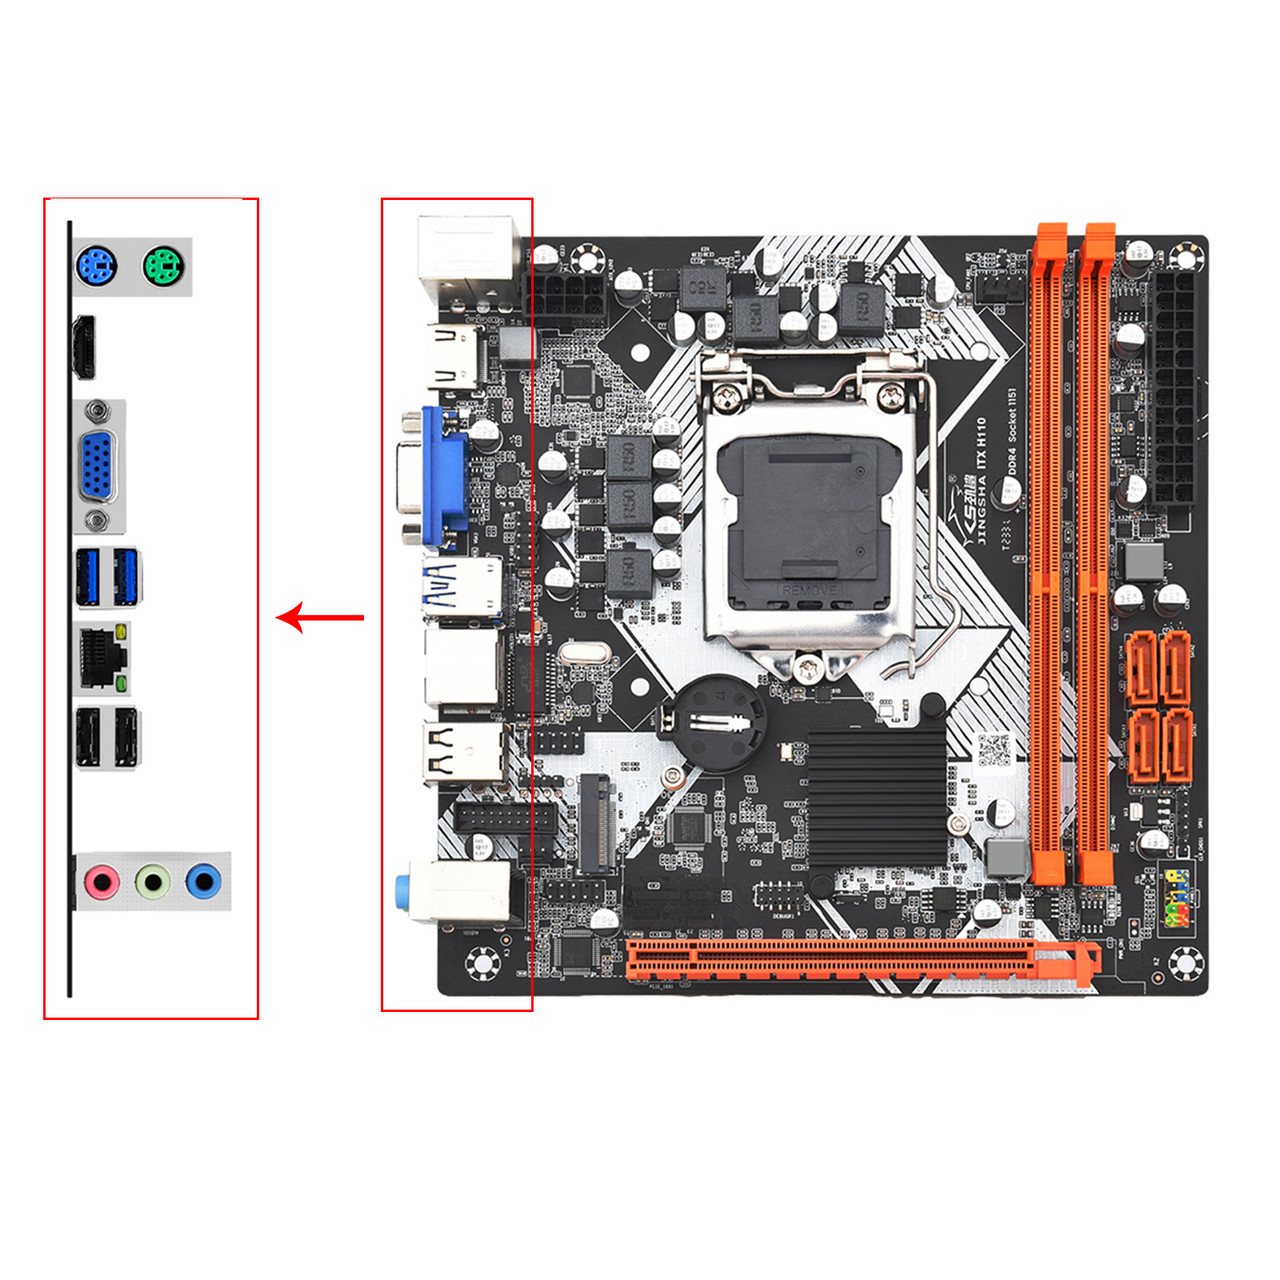 ITX H110 Motherboard LGA 1151 Support 2*DDR3 USB3.0 SATA3 NVME WIFI Bluetooth